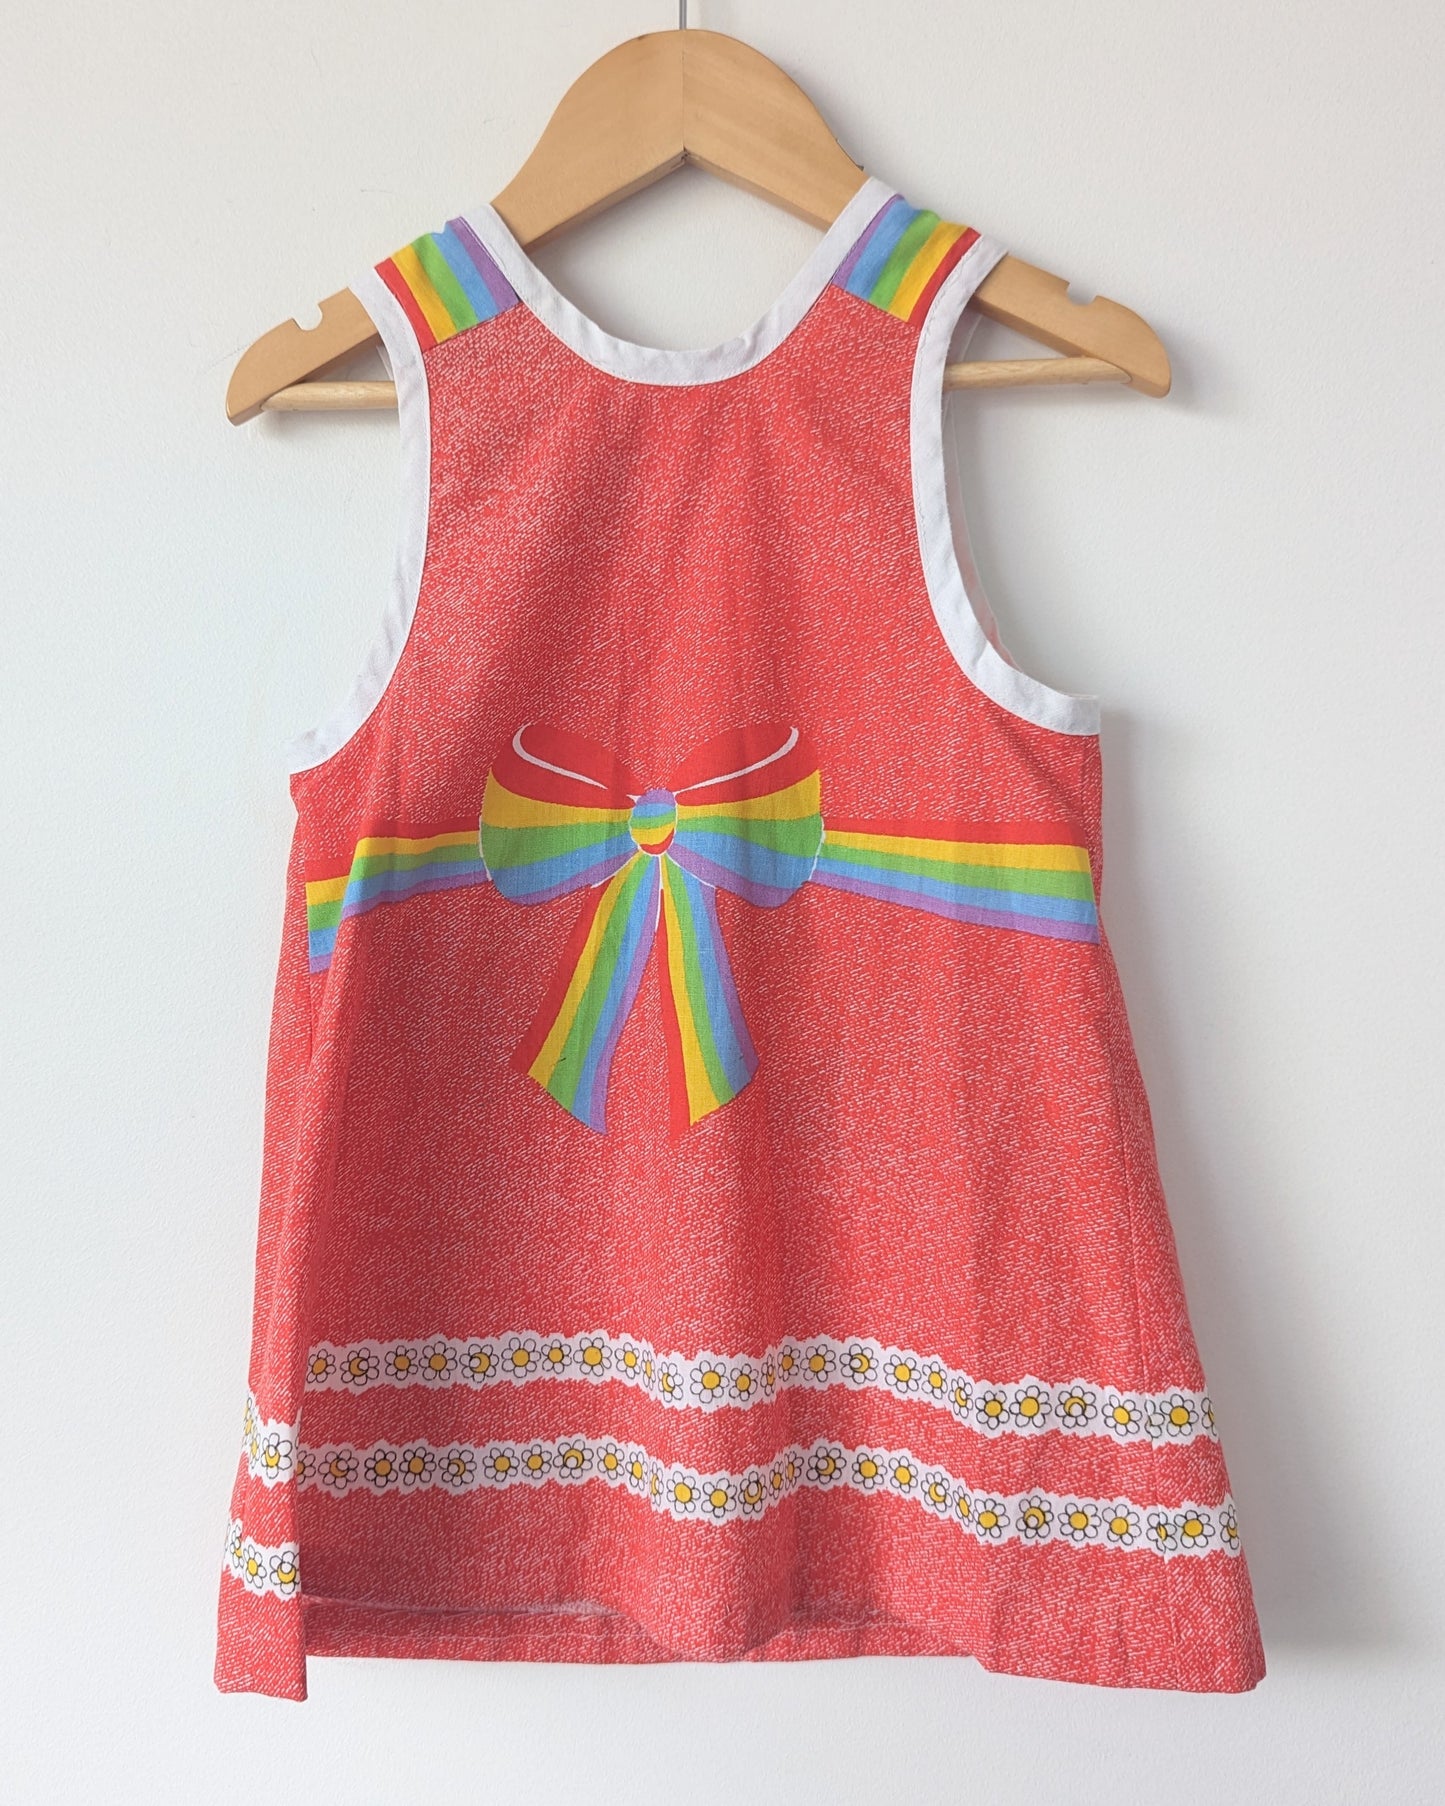 Vintage Barbara Alexander Rainbow Apron Dress • 2T